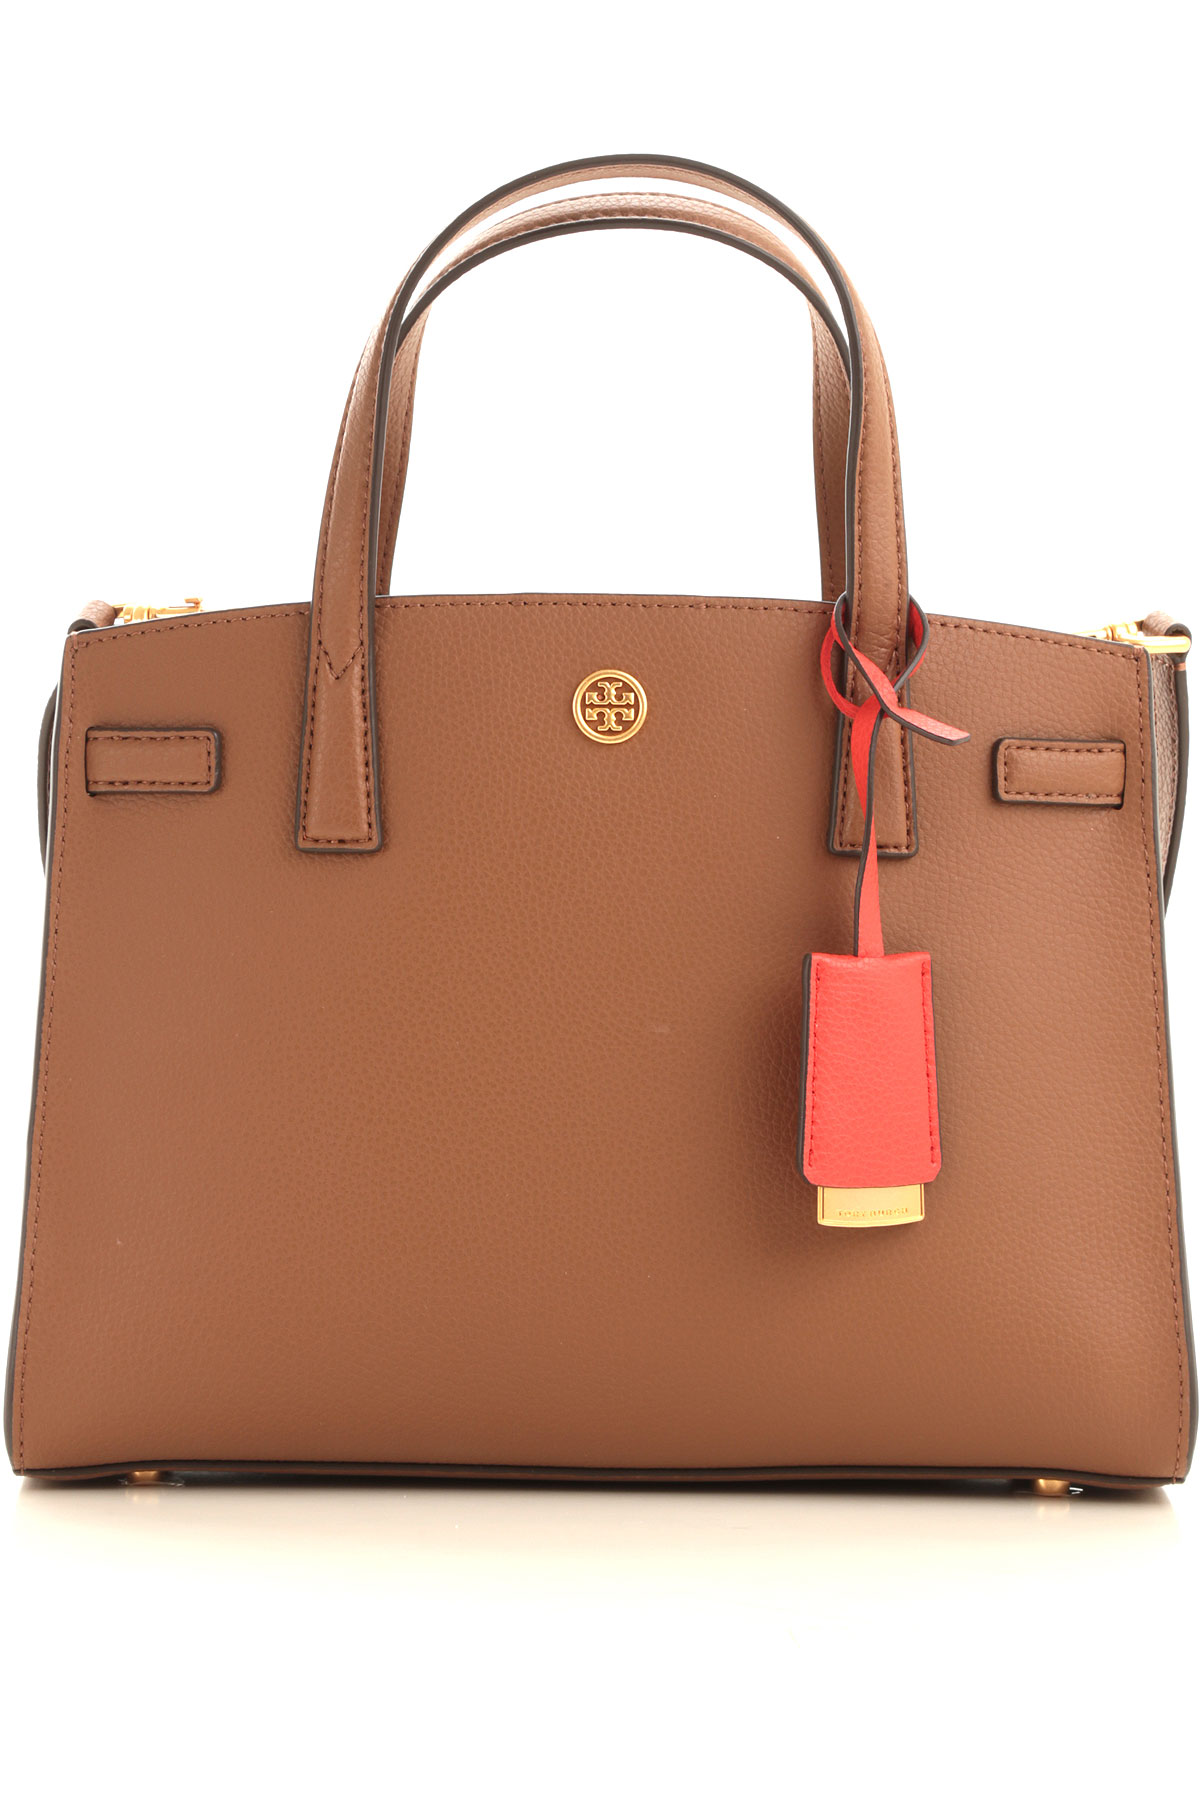 Handbags Tory Burch, Style code 73625909